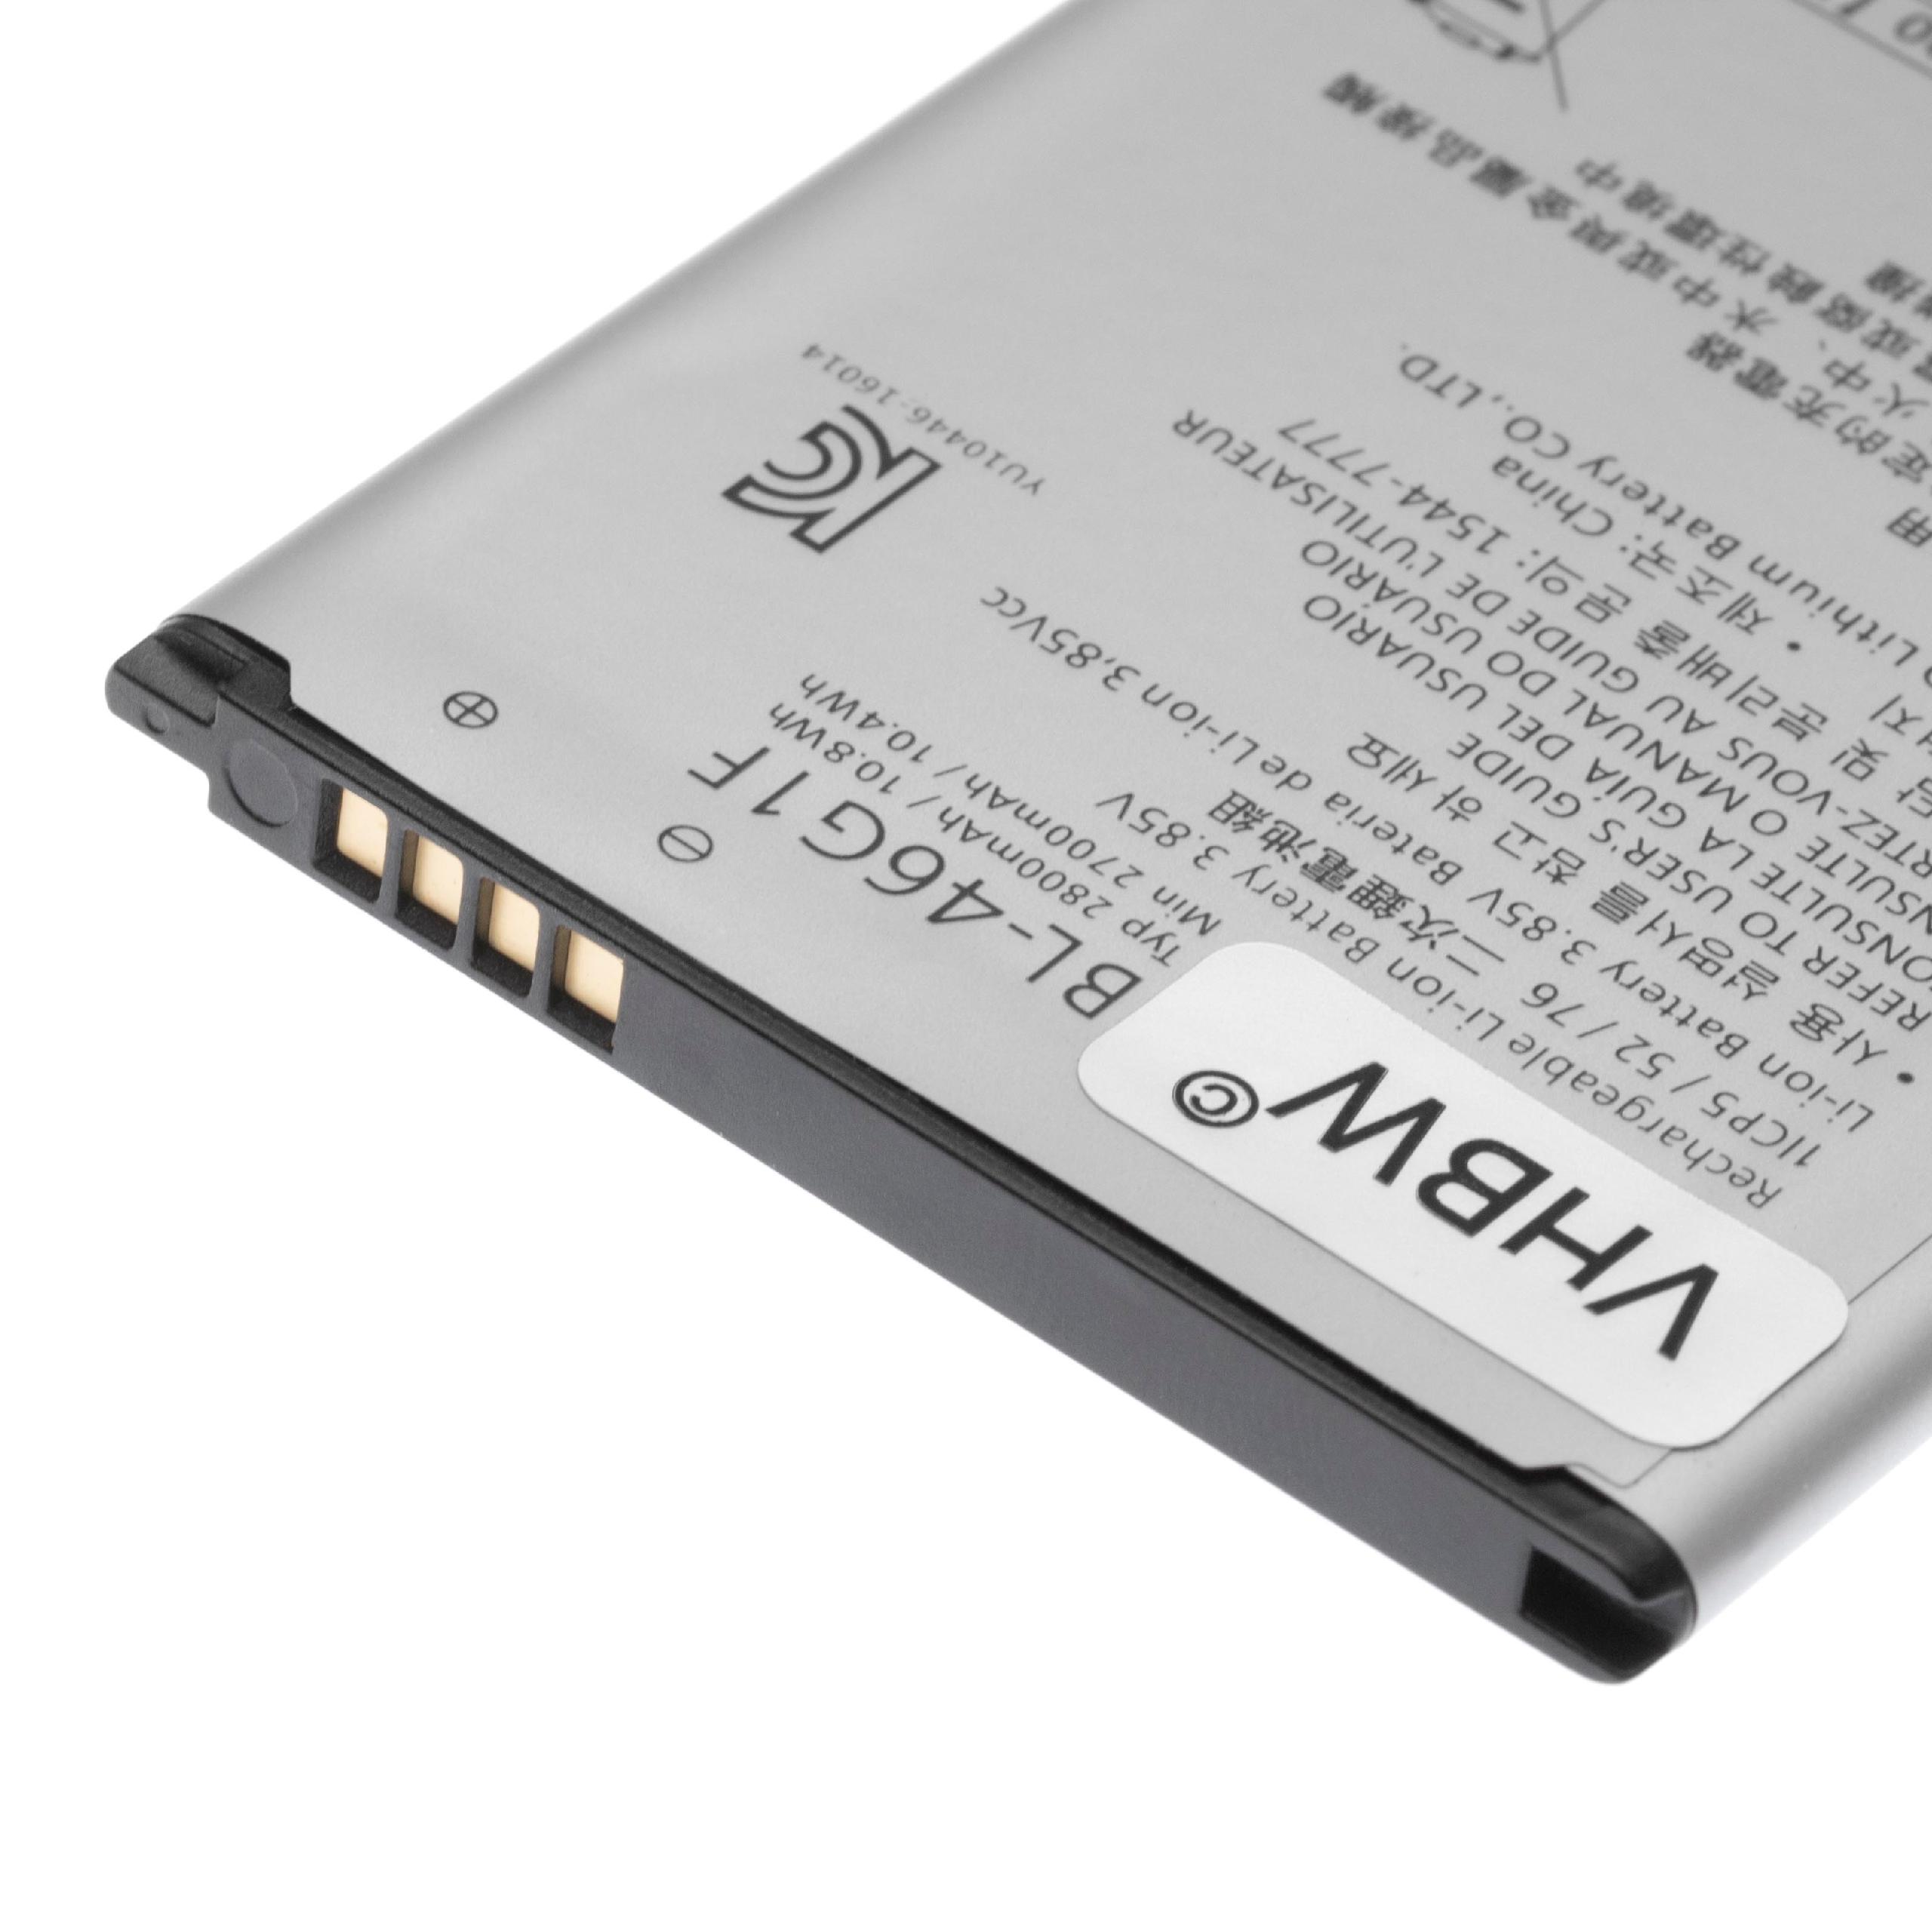 Batteria sostituisce LG BL-46G1F per cellulare LG - 2200mAh 3,85V Li-Ion